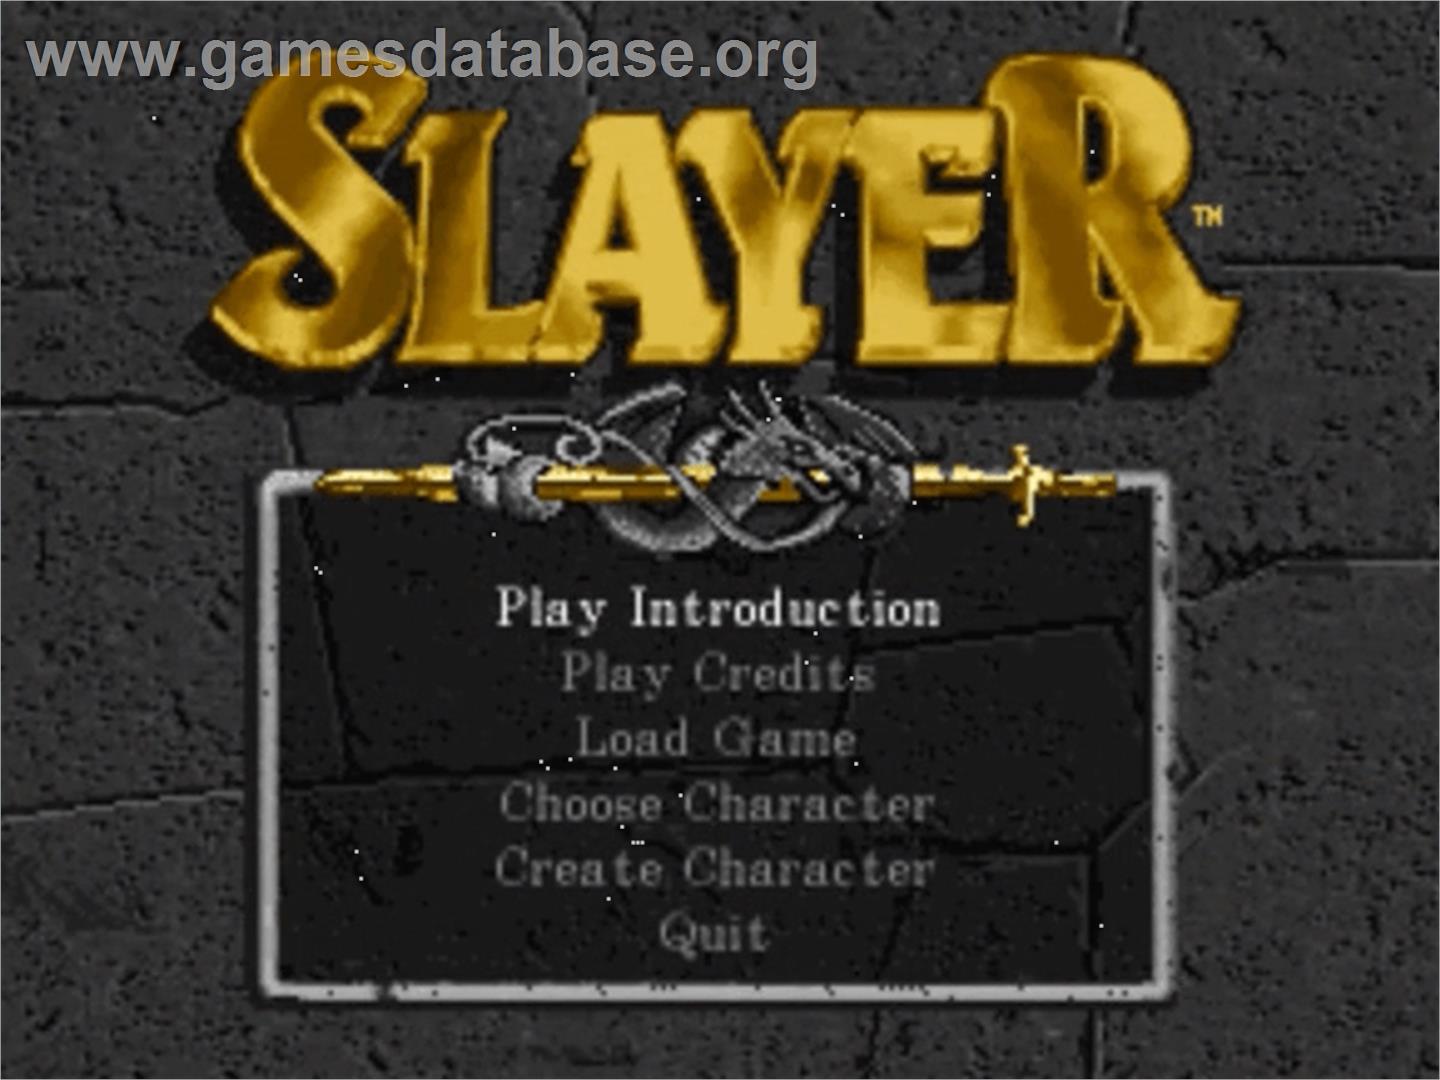 Slayer - Panasonic 3DO - Artwork - Title Screen